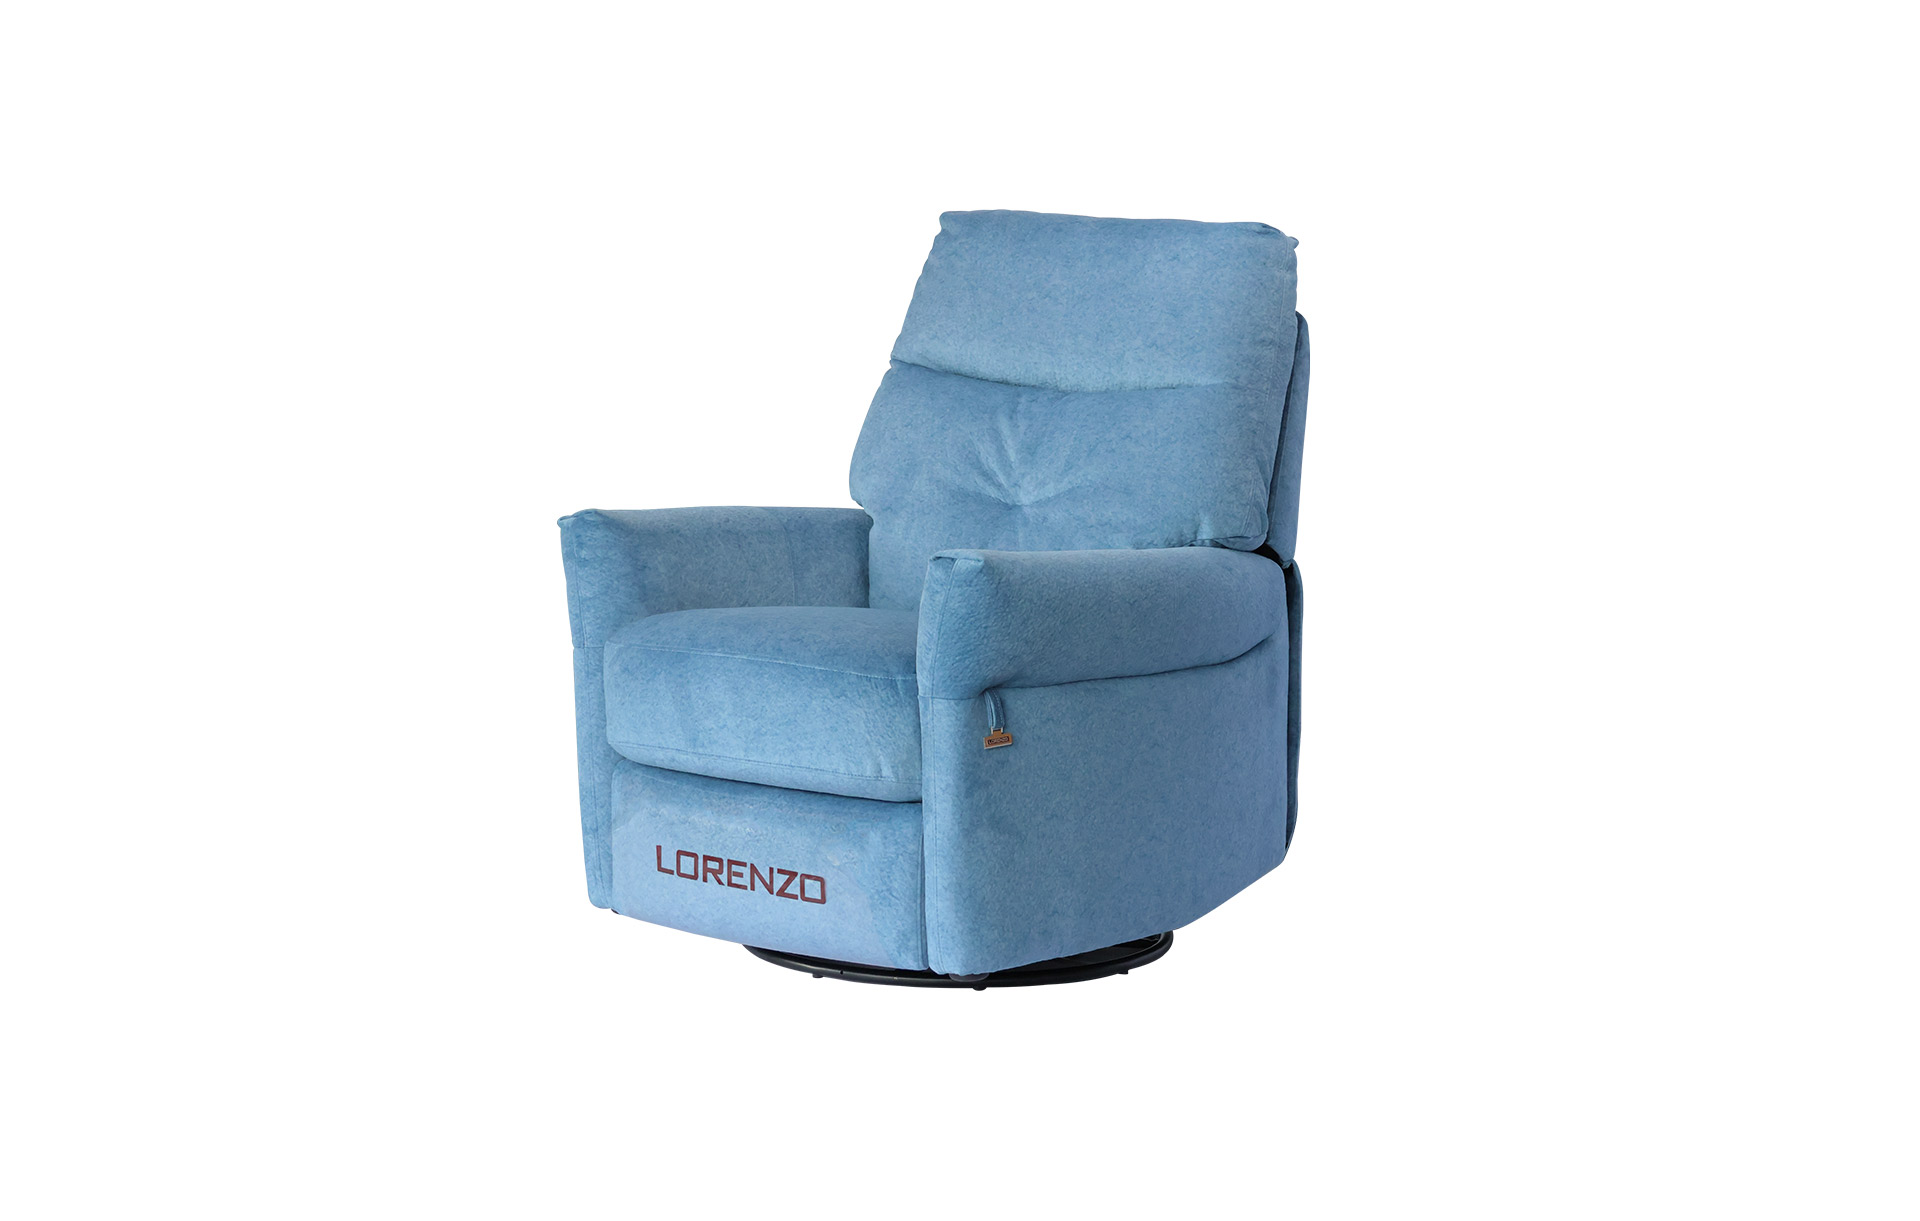 H06721 布面電動功能沙發椅  |系列產品|單人椅